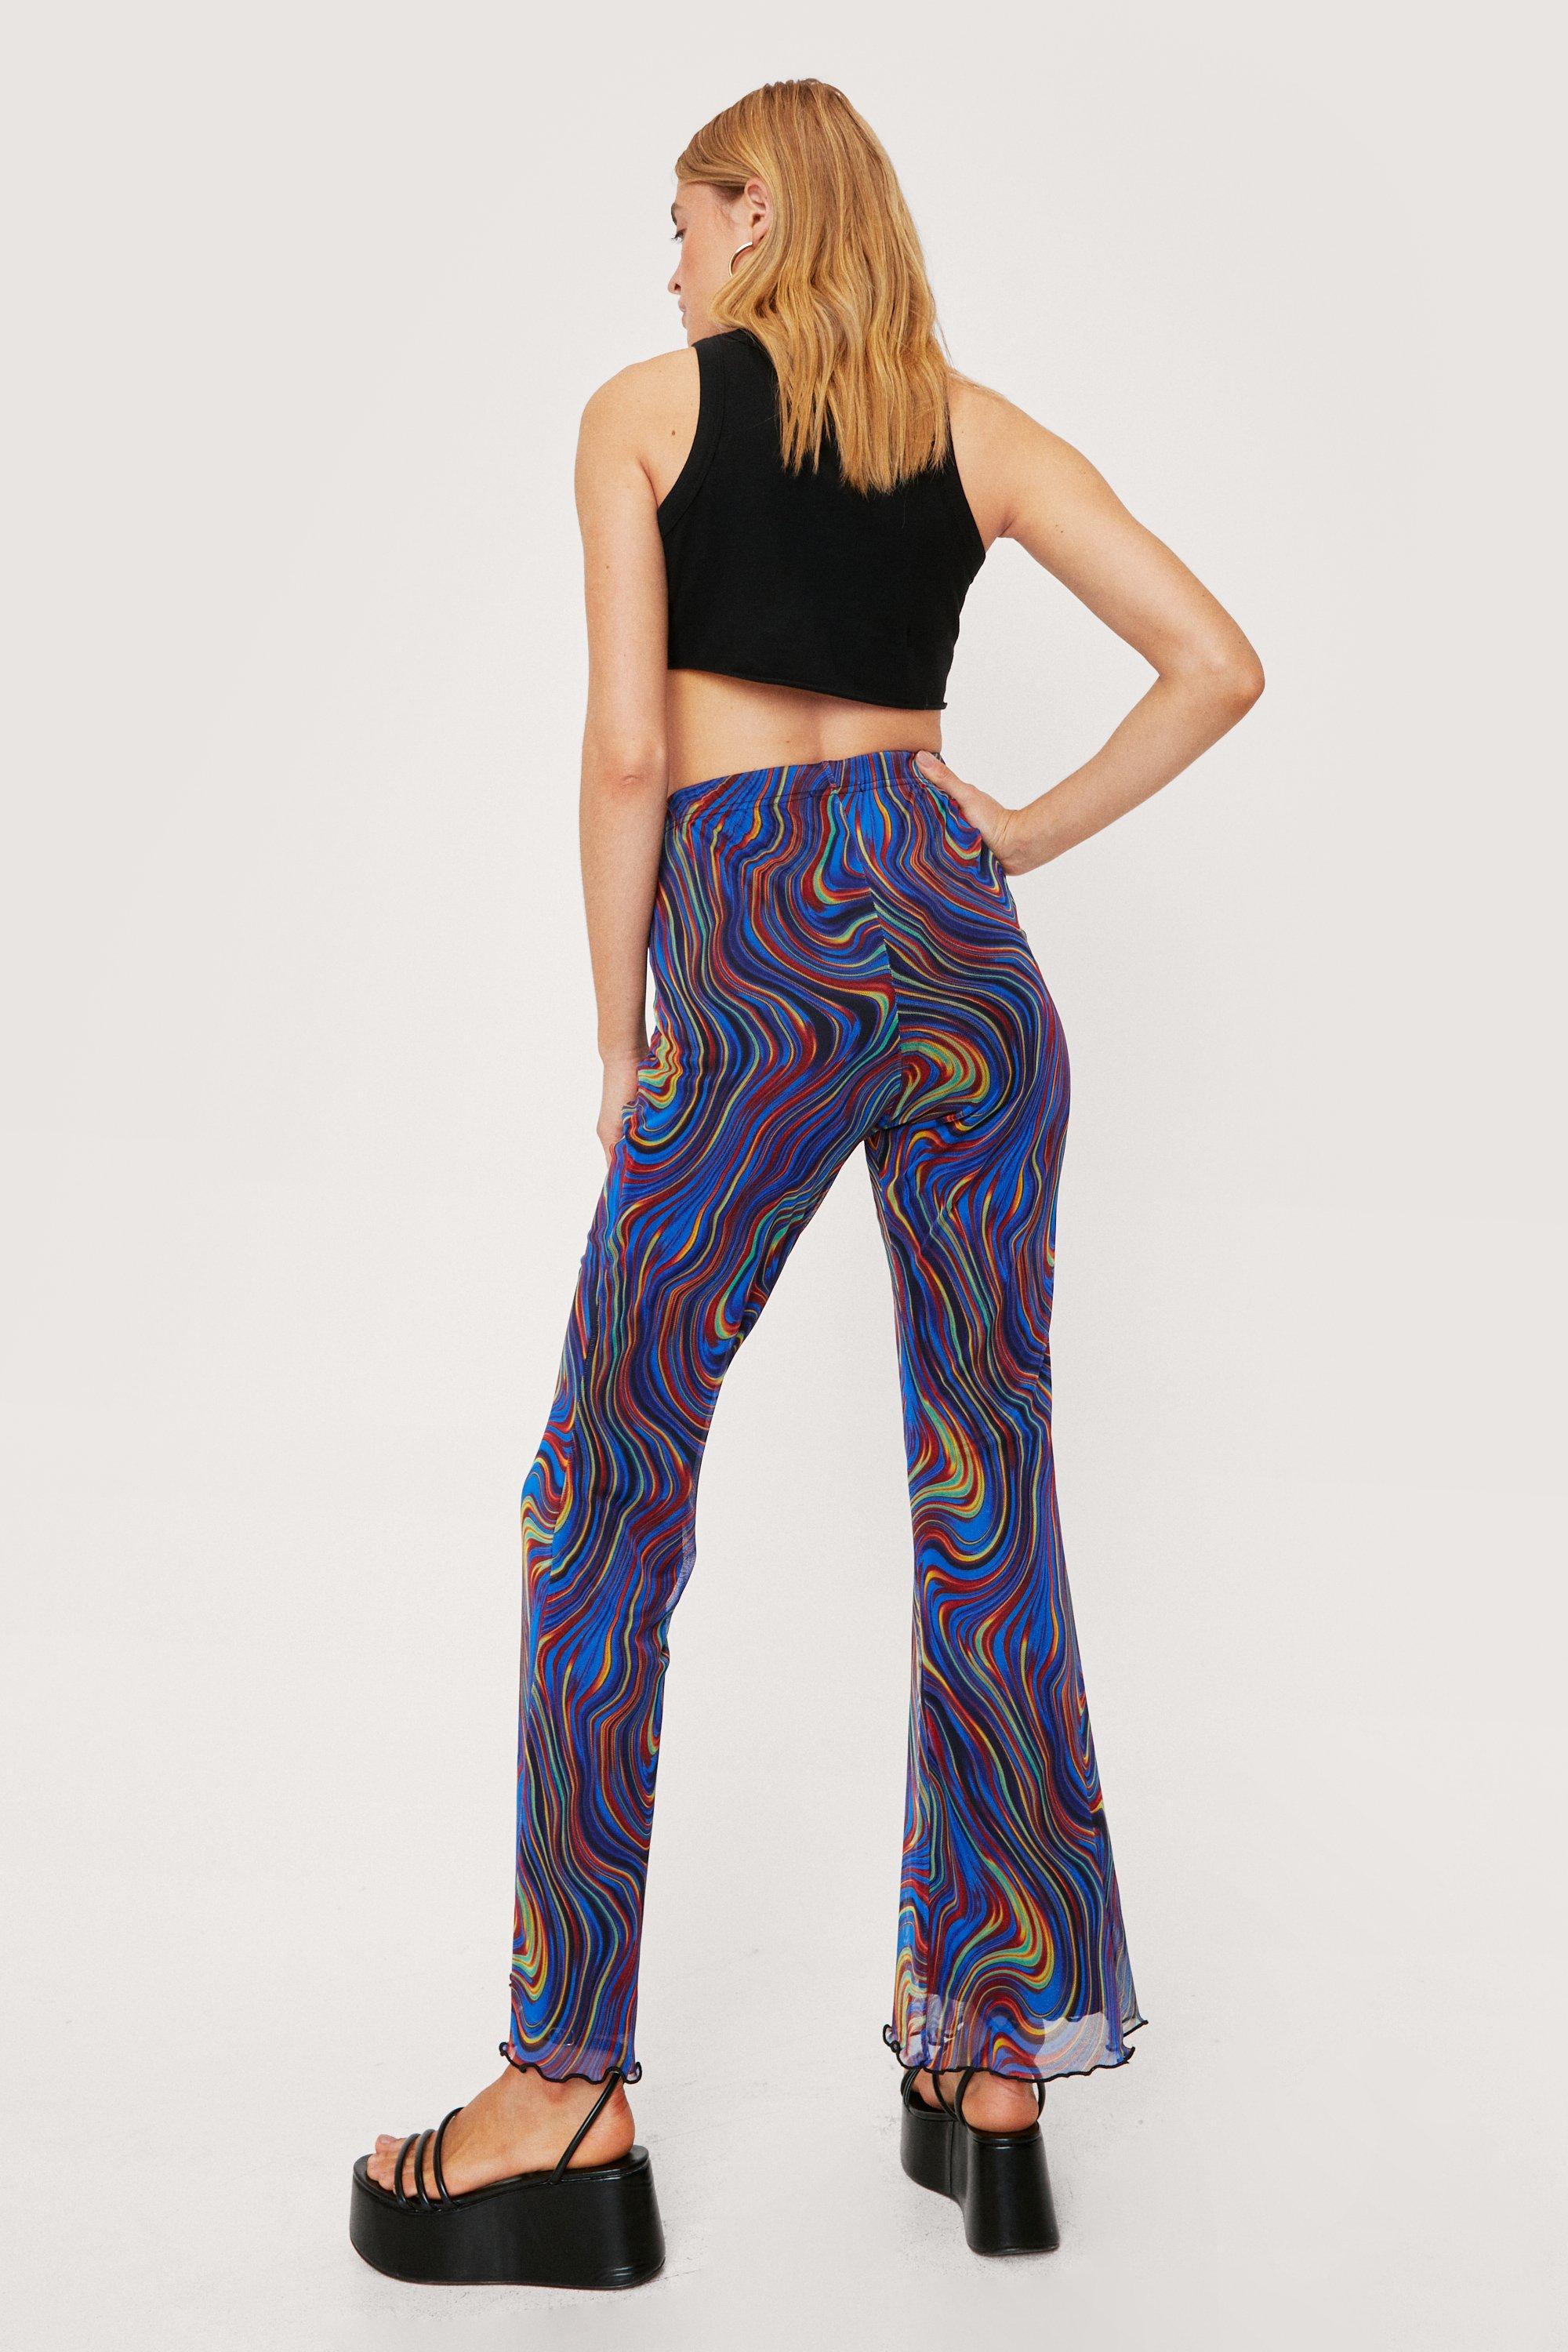 Women's Abstract Print Flare Pants Elastic Waist